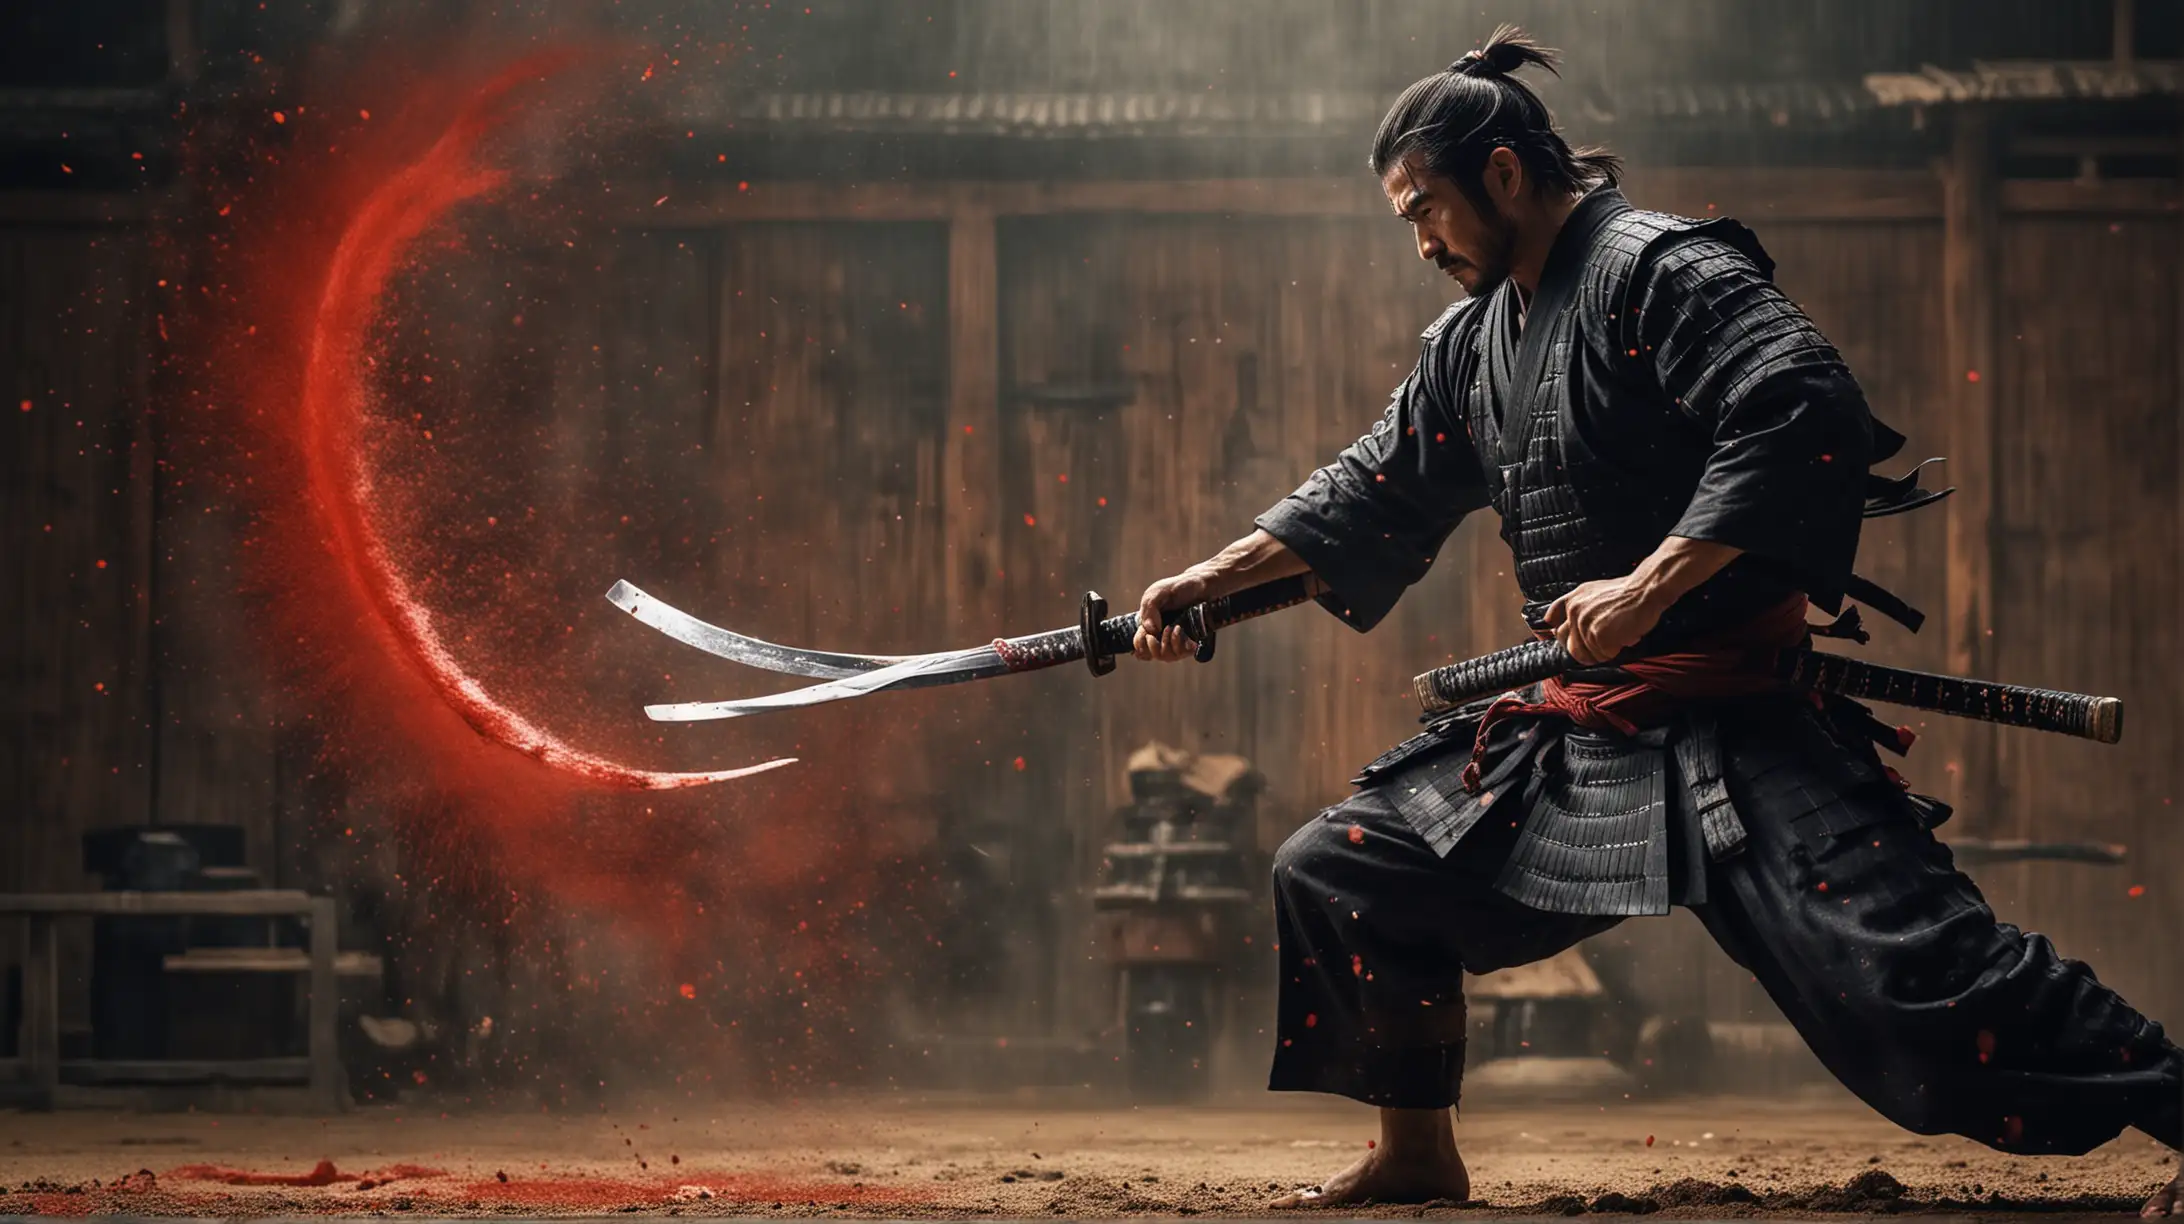 Intense Shogun vs Samurai Duel with Bloodshed in Historic Setting